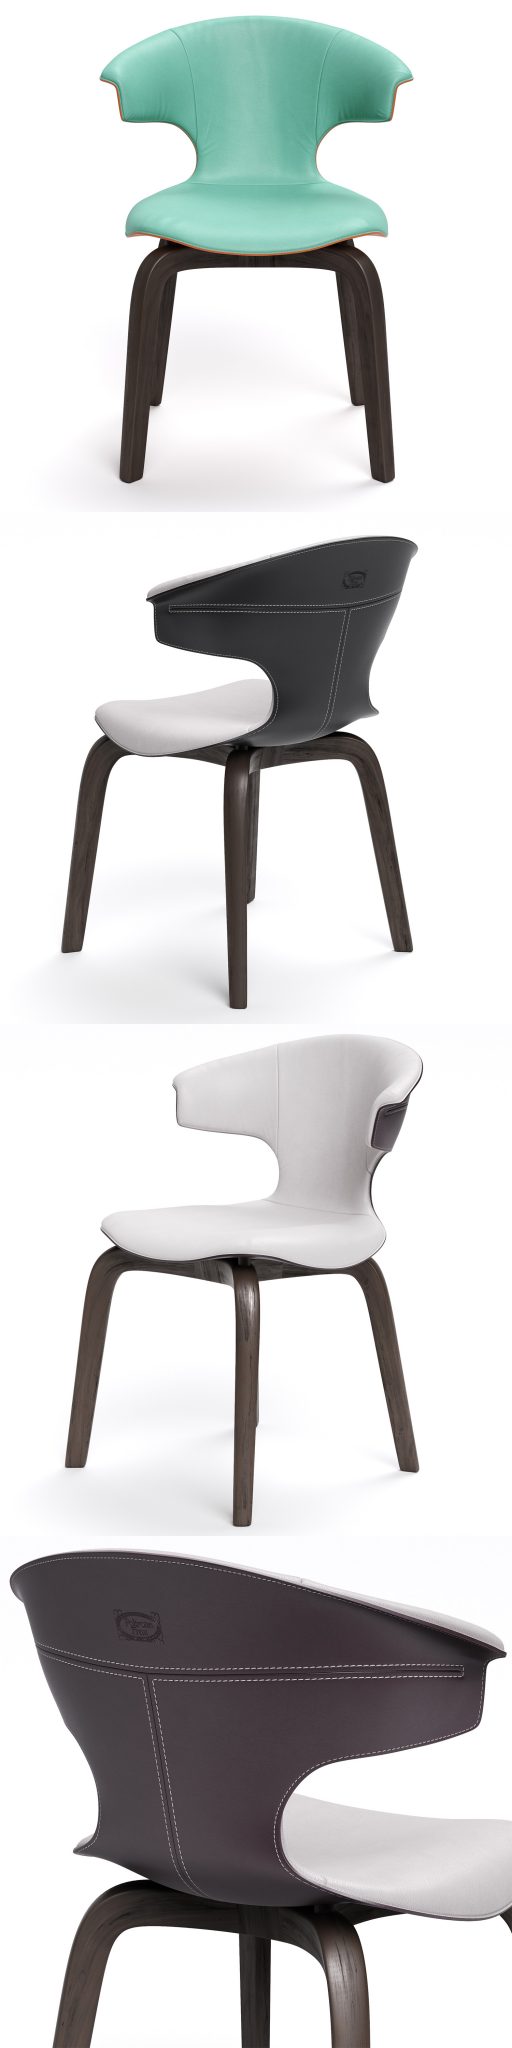 Poltrona Frau Montera & Fred Table & Chair 3D Model 2